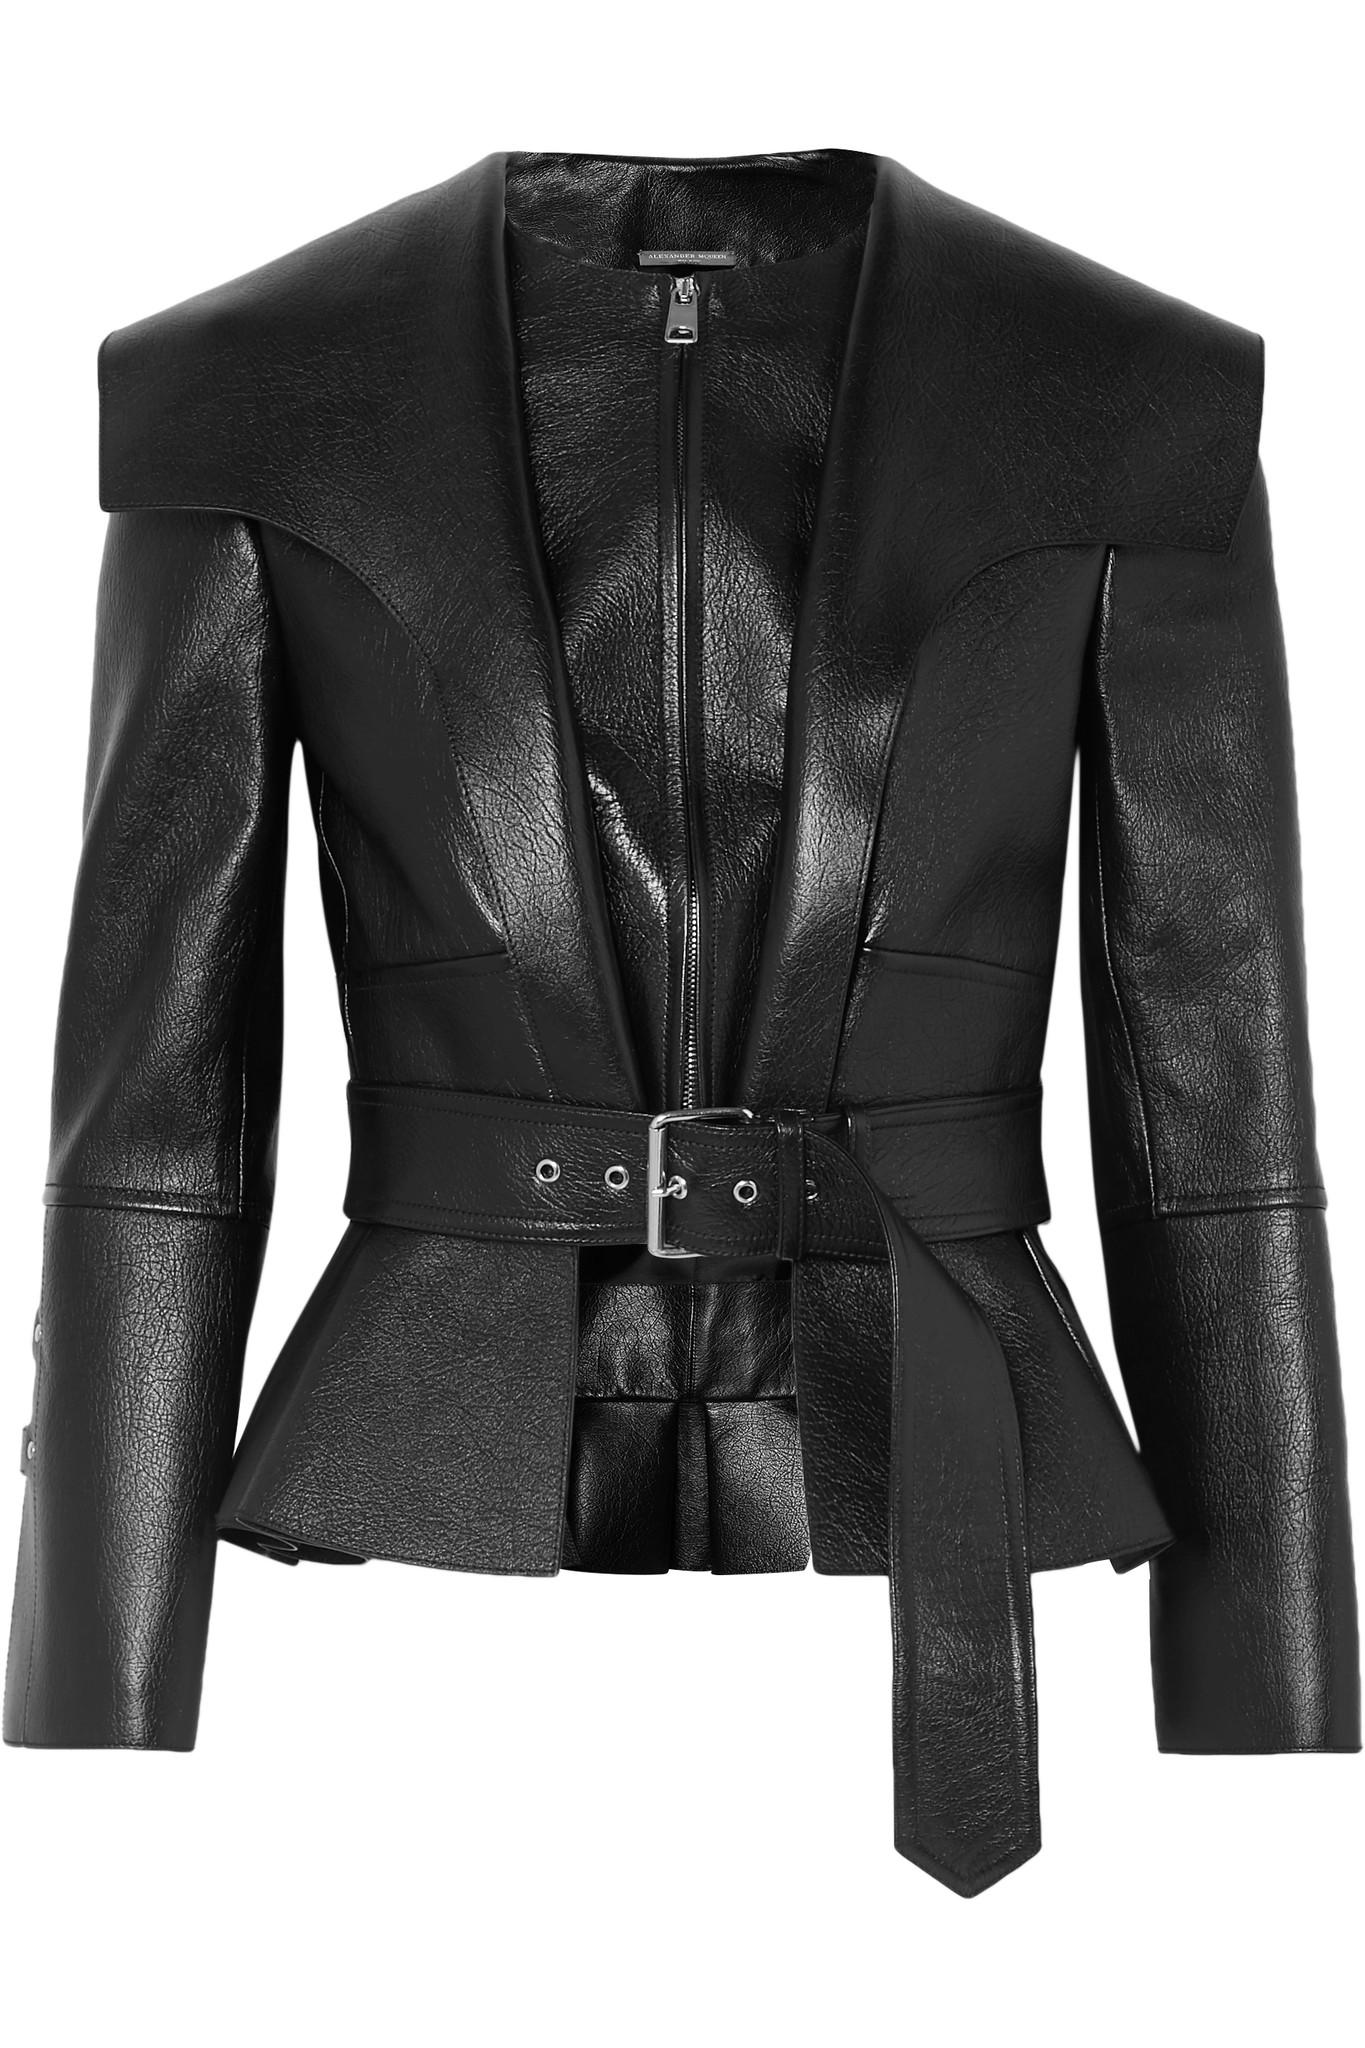 Lyst - Alexander McQueen Textured-leather Belted Peplum Jacket in Black